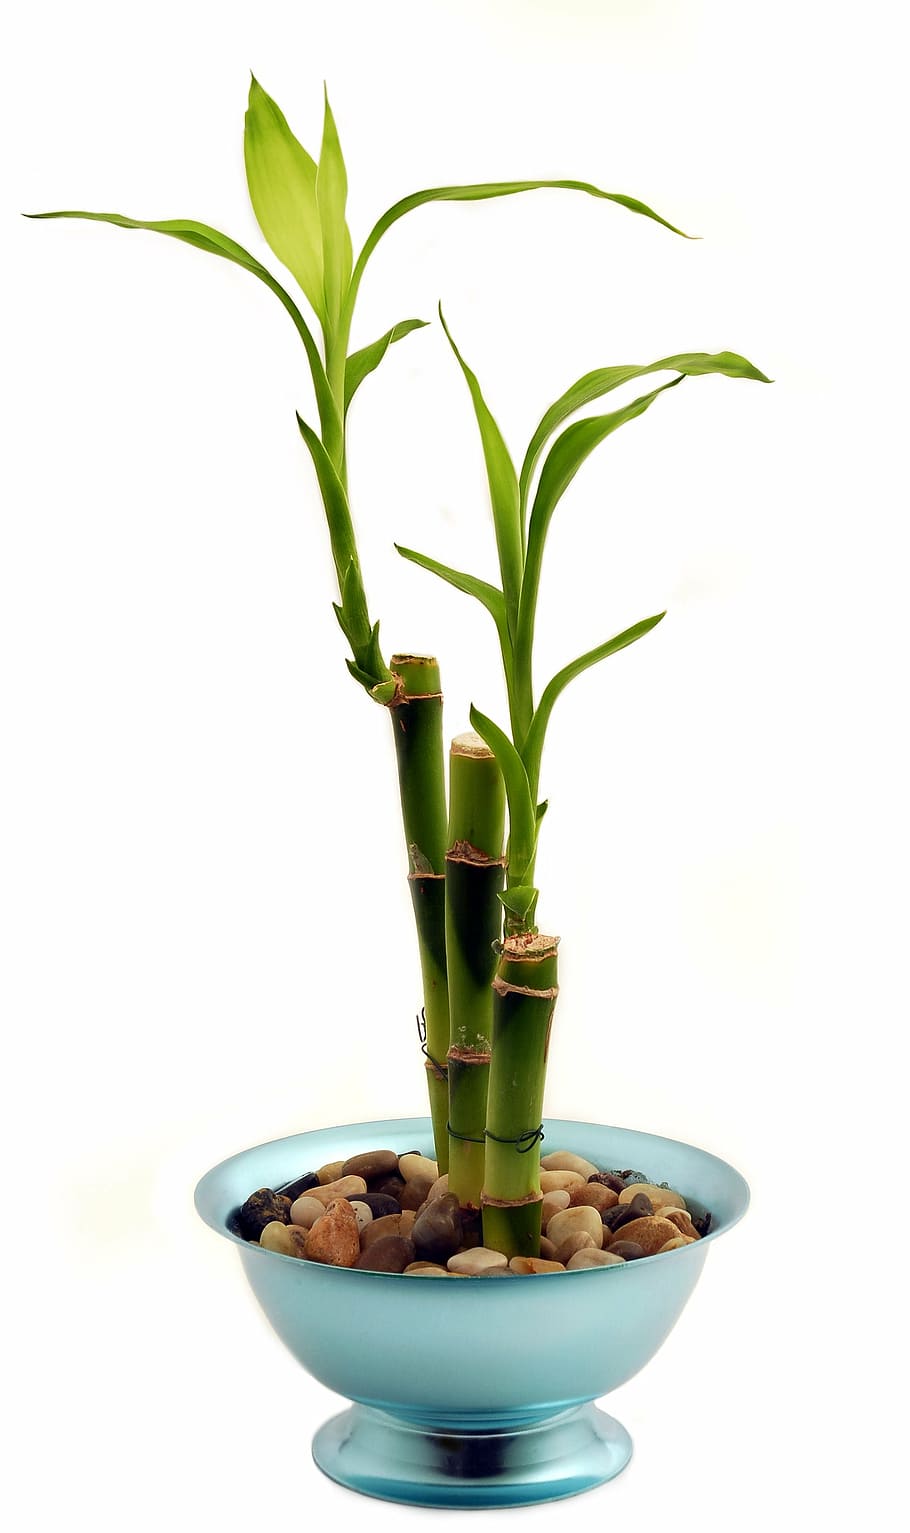 bambu da sorte, bambu, planta de casa, vaso de plantas, vaso, flor, planta, ninguém, fitoterapia, dentro de casa